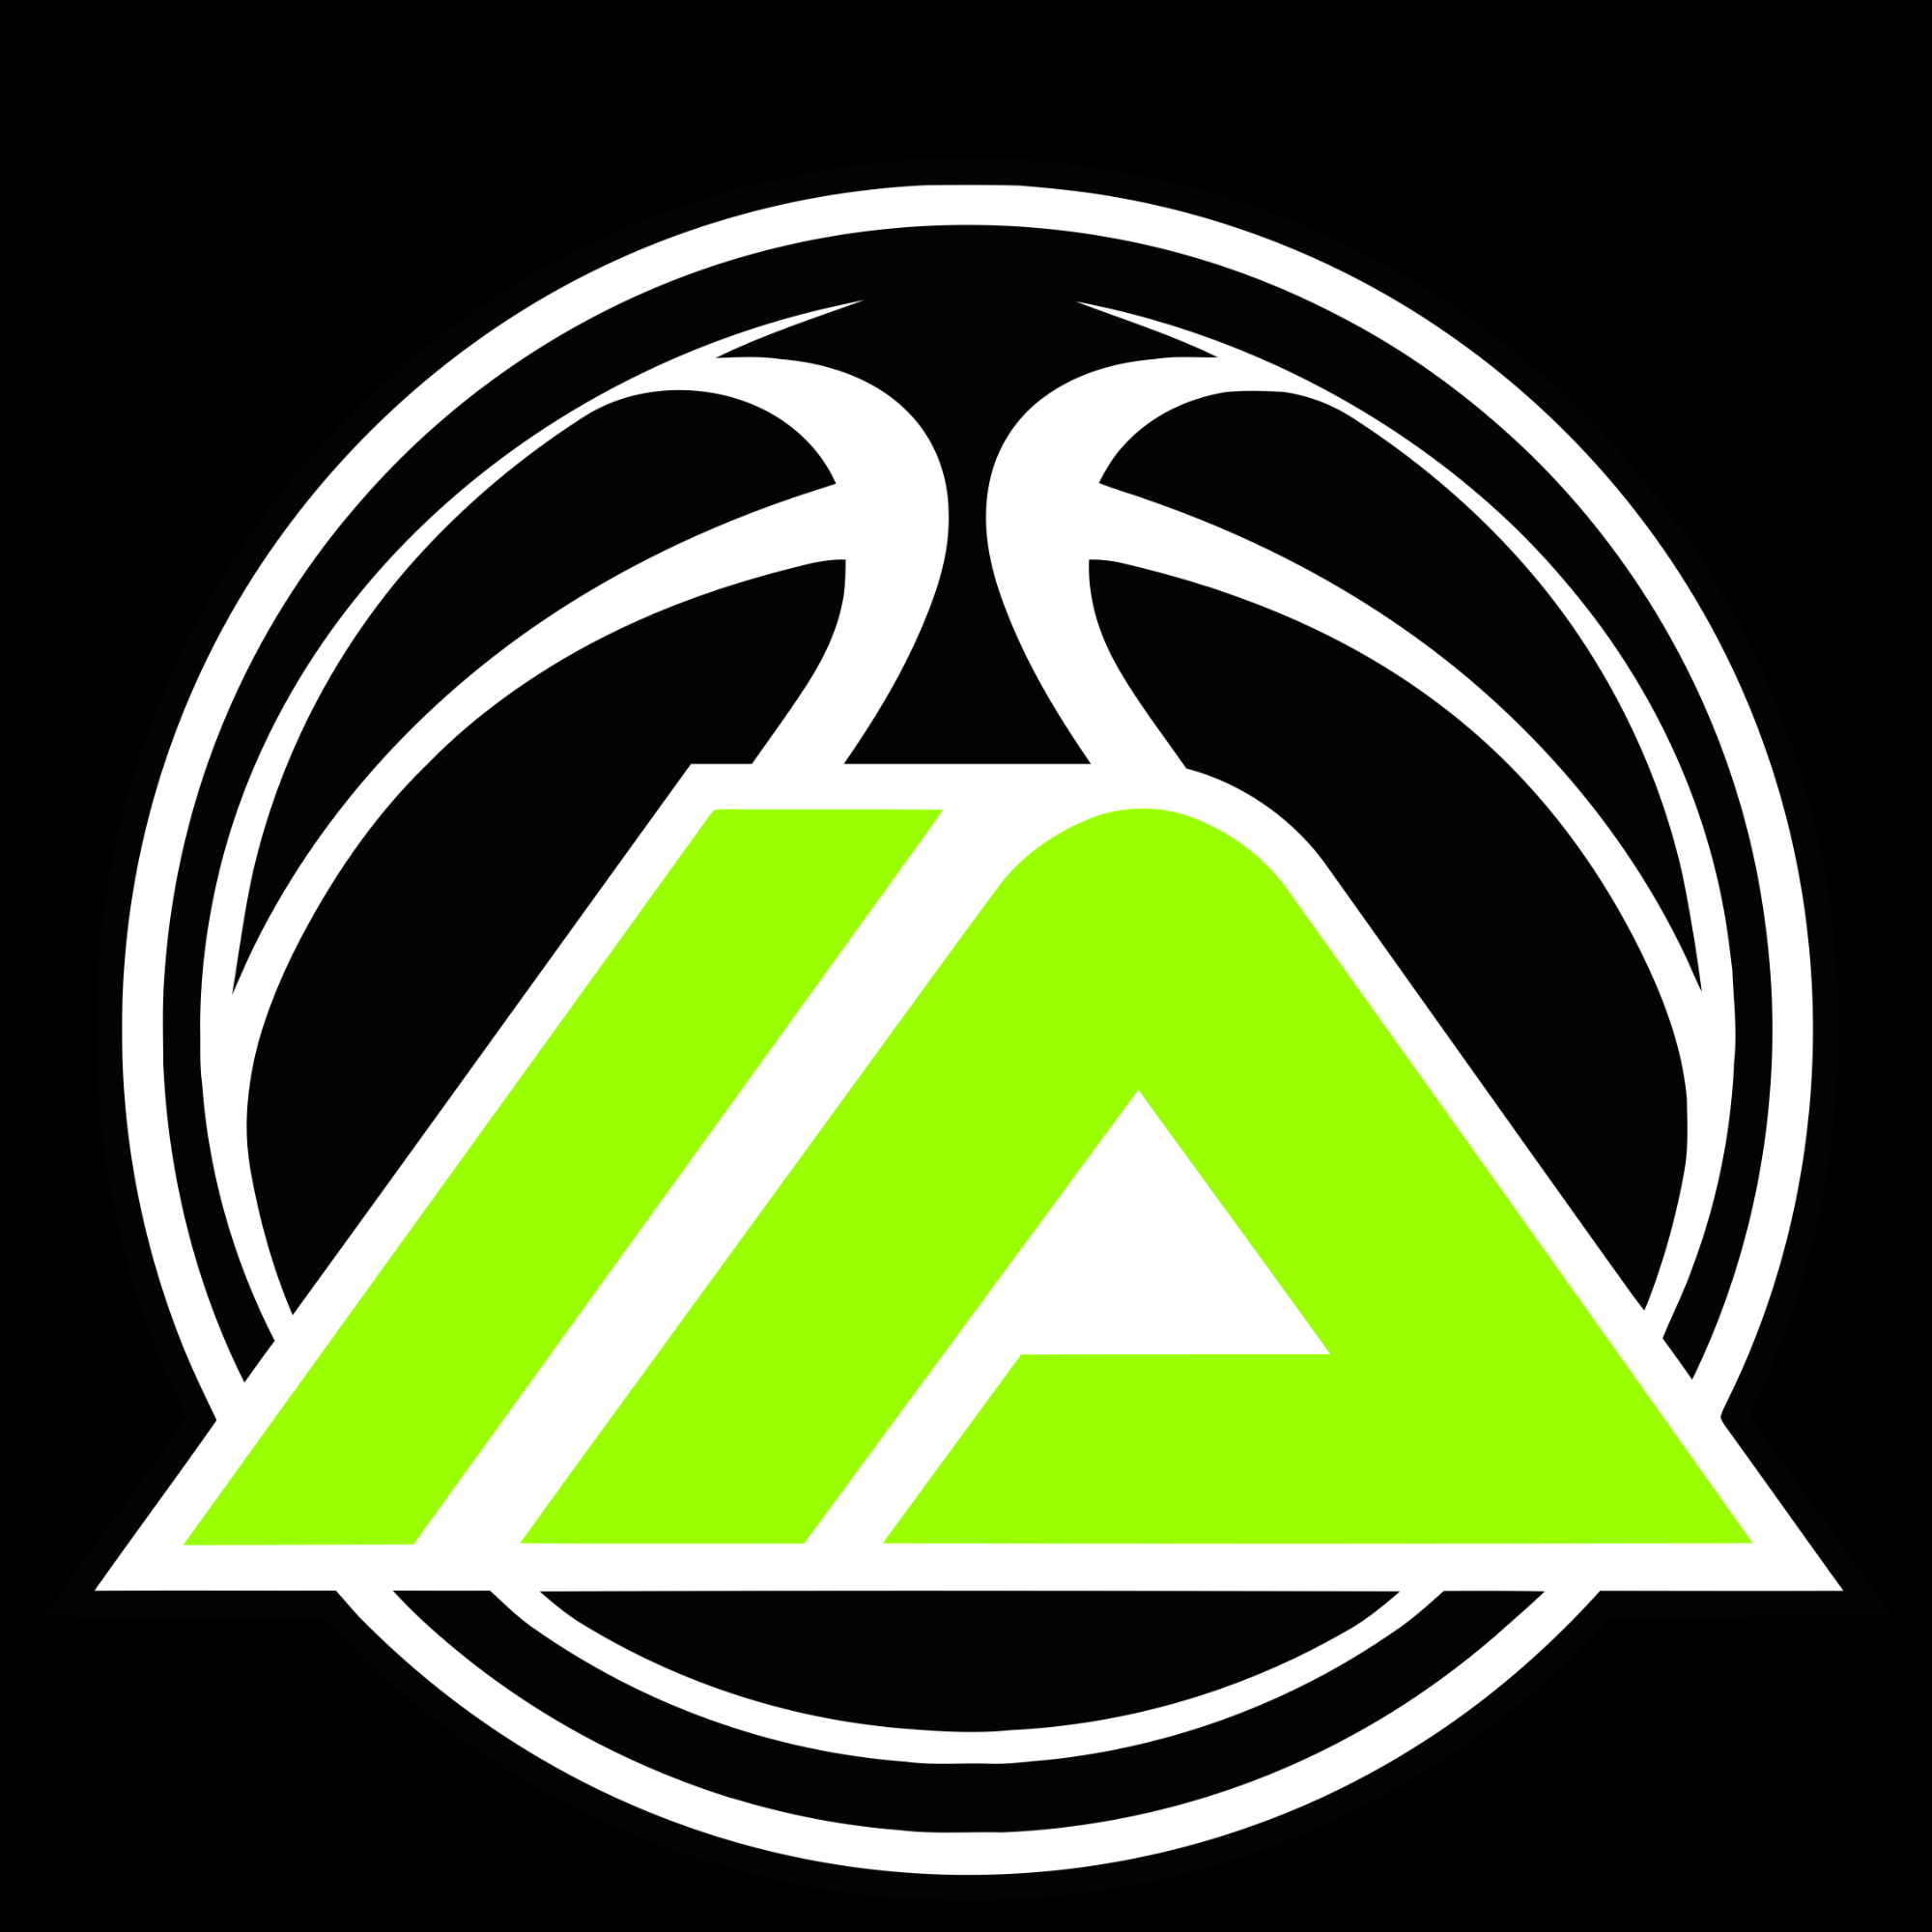 Organization logo for Inspired Athletics